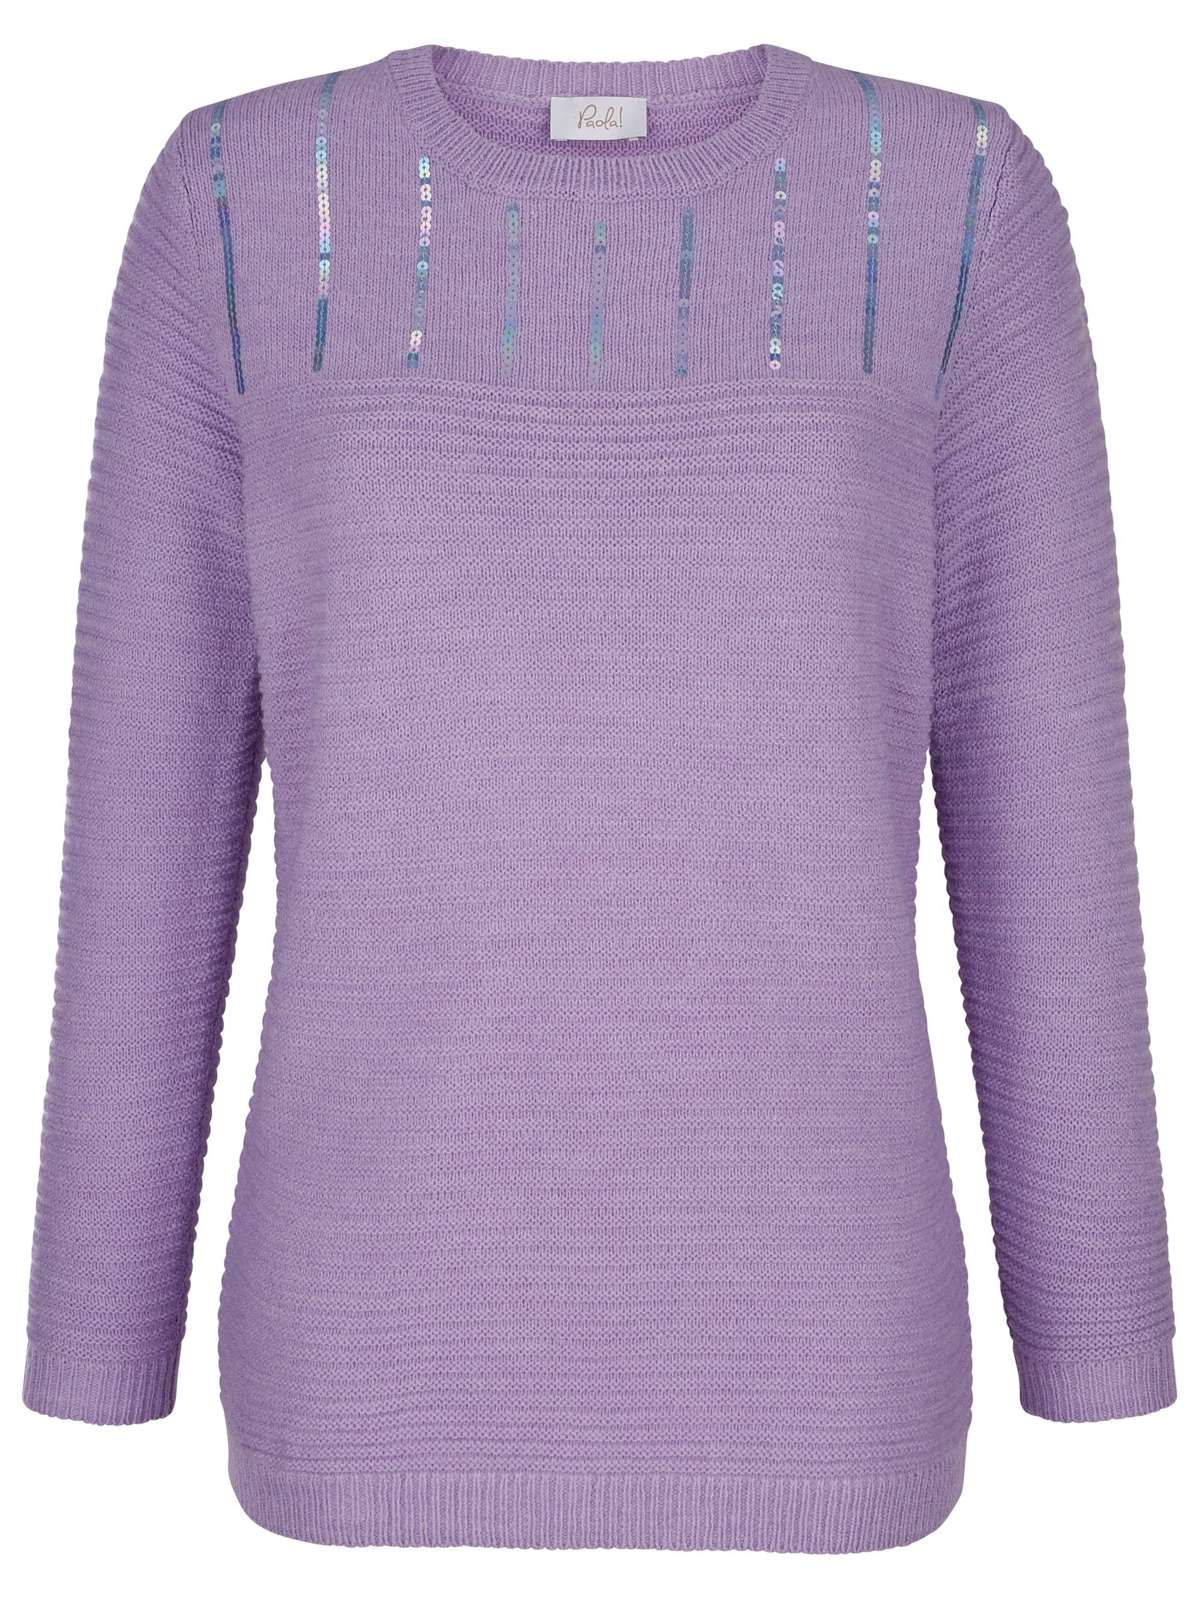 Вязаный свитер-свитер с пайетками